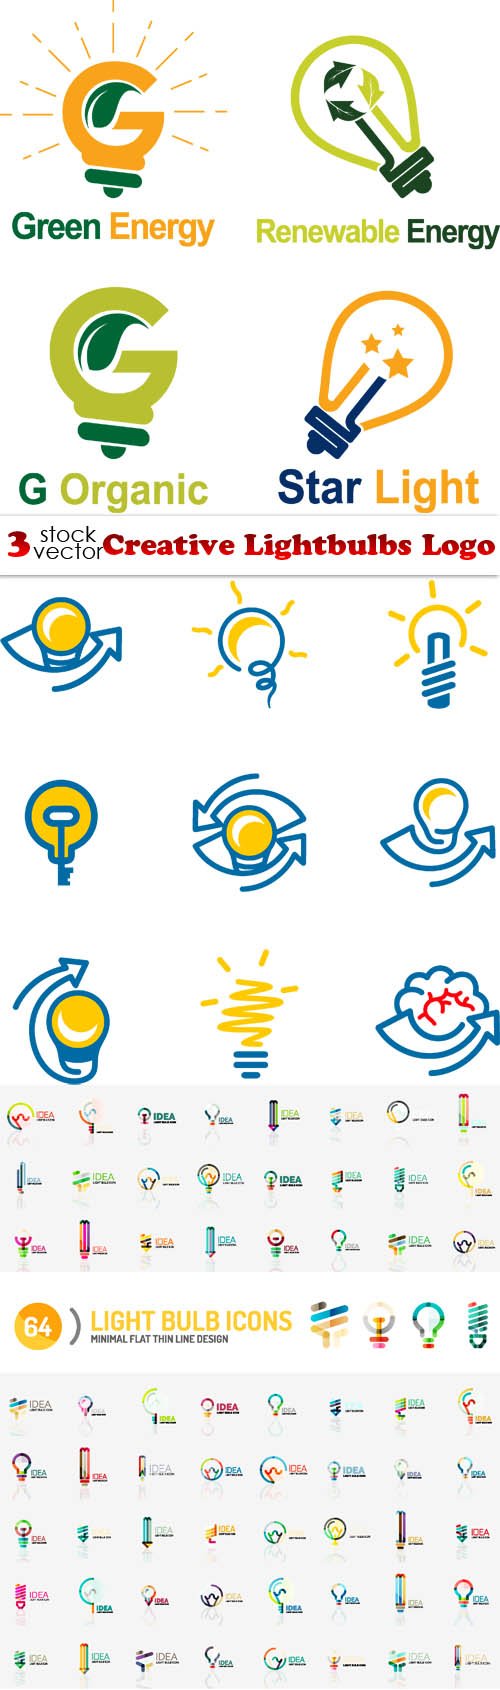 Vectors - Creative Lightbulbs Logo